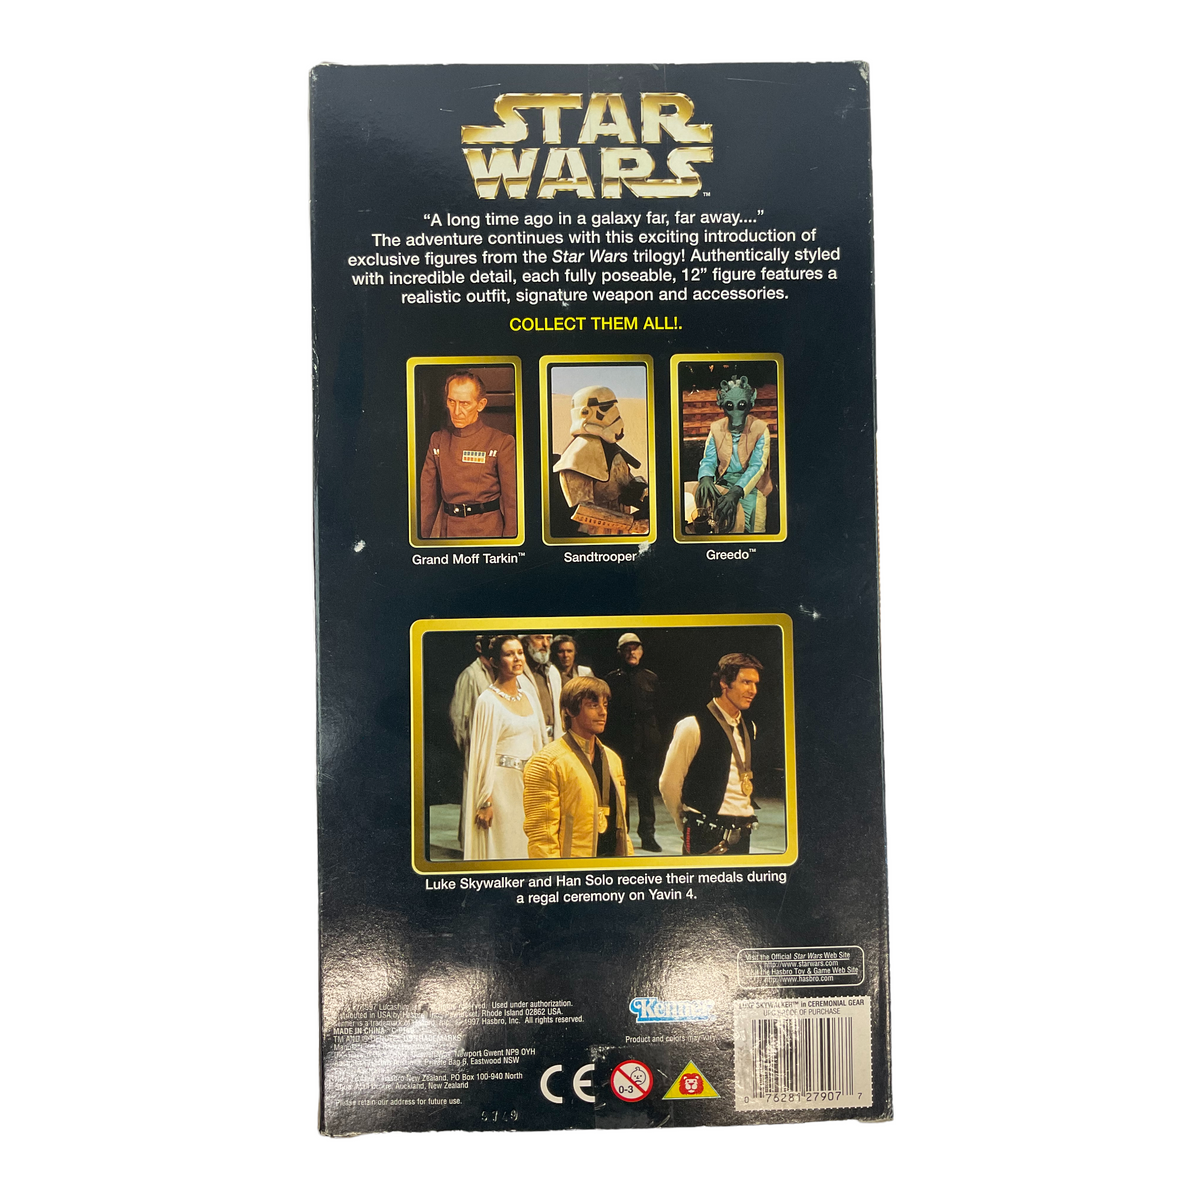 Star Wars Action Collection 12&quot; Luke Skywalker Figure in Ceremonial Gear